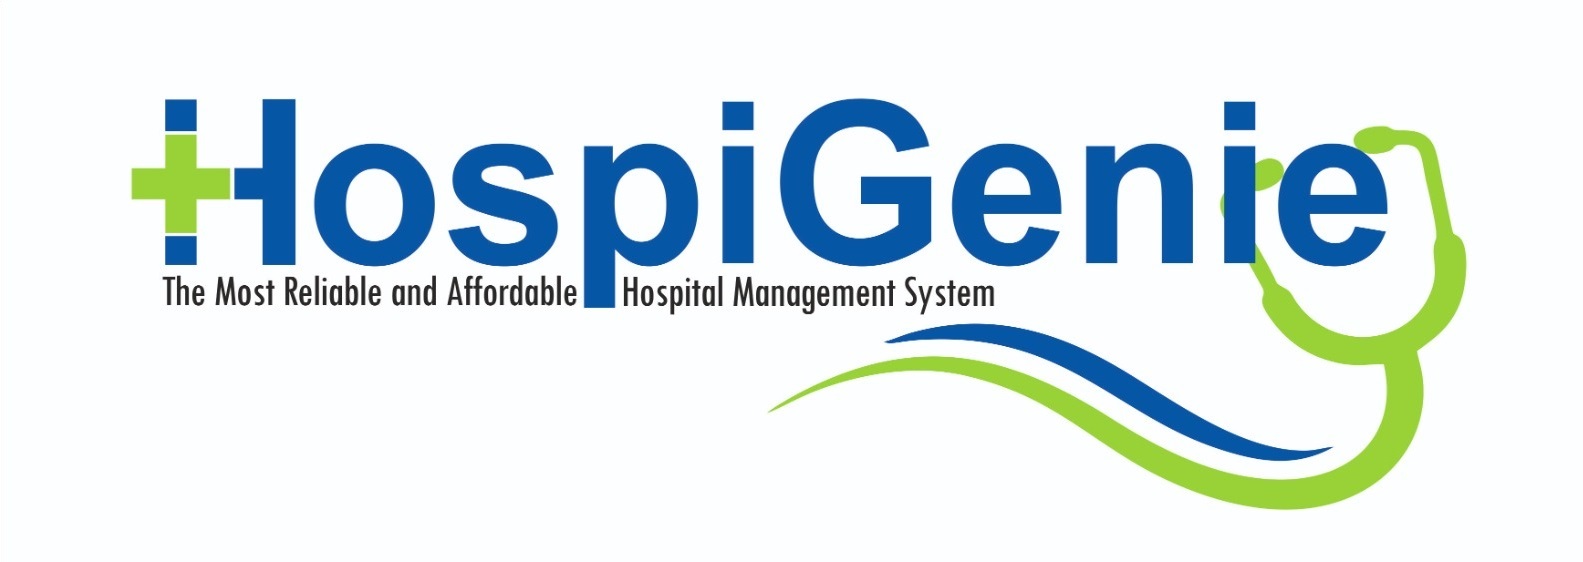 Hospital Management System | Hospital Software - HospiGenie